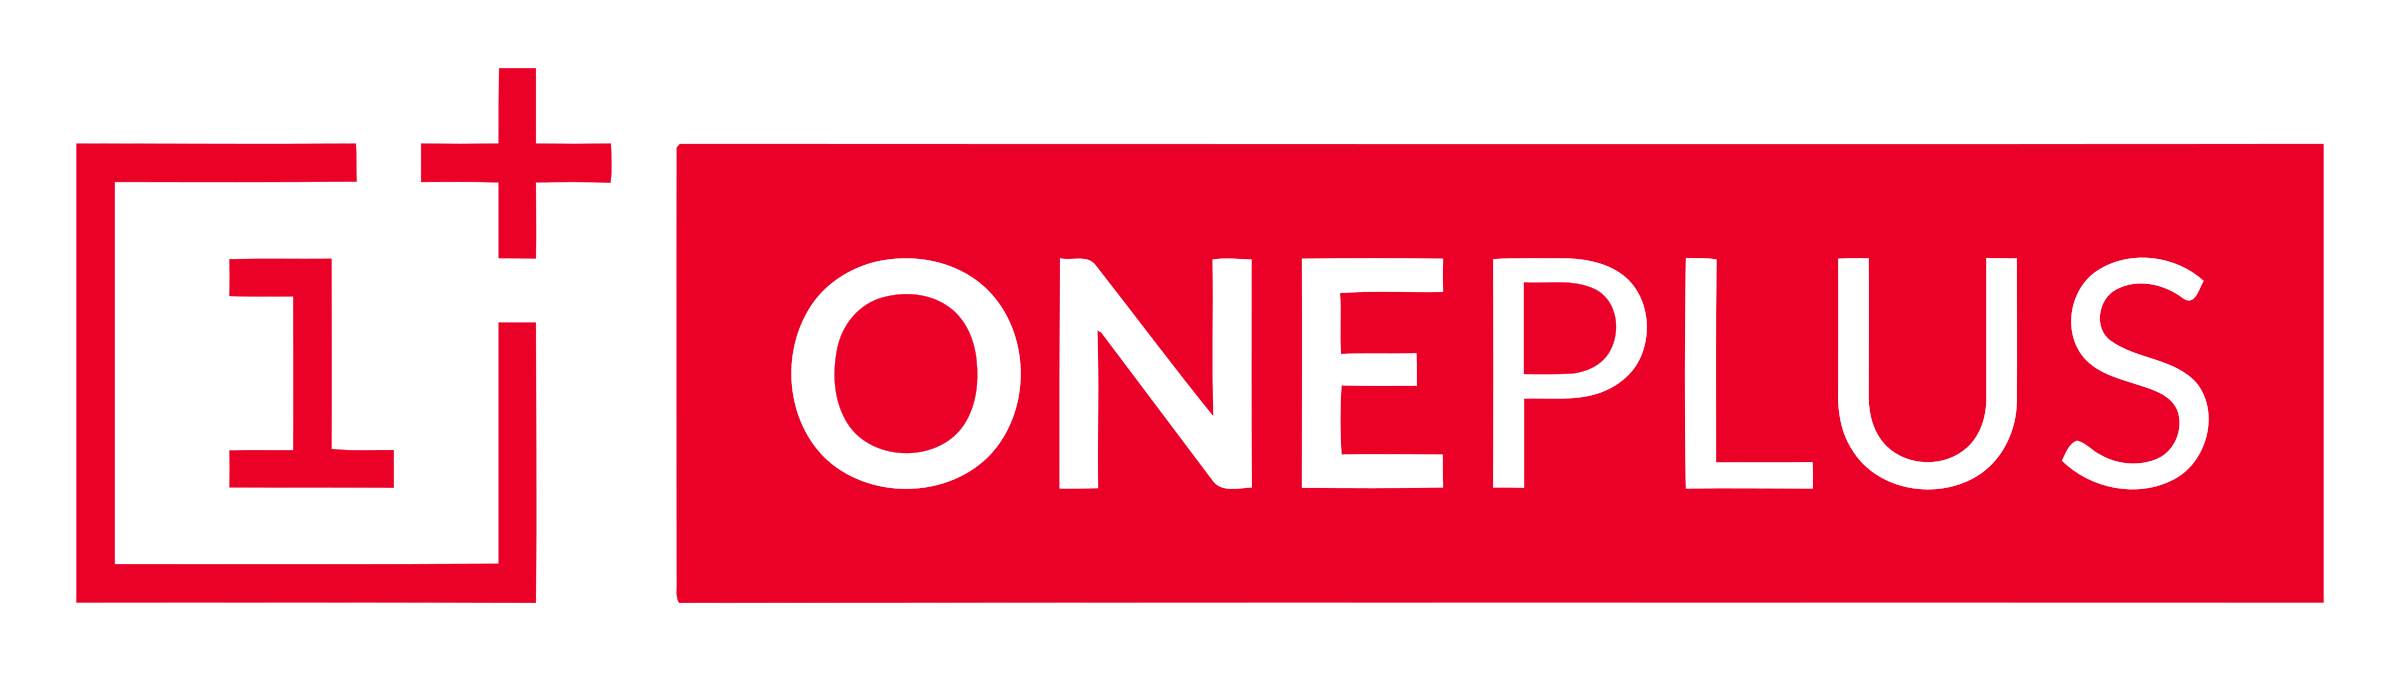 oneplus-logo-png-transparent